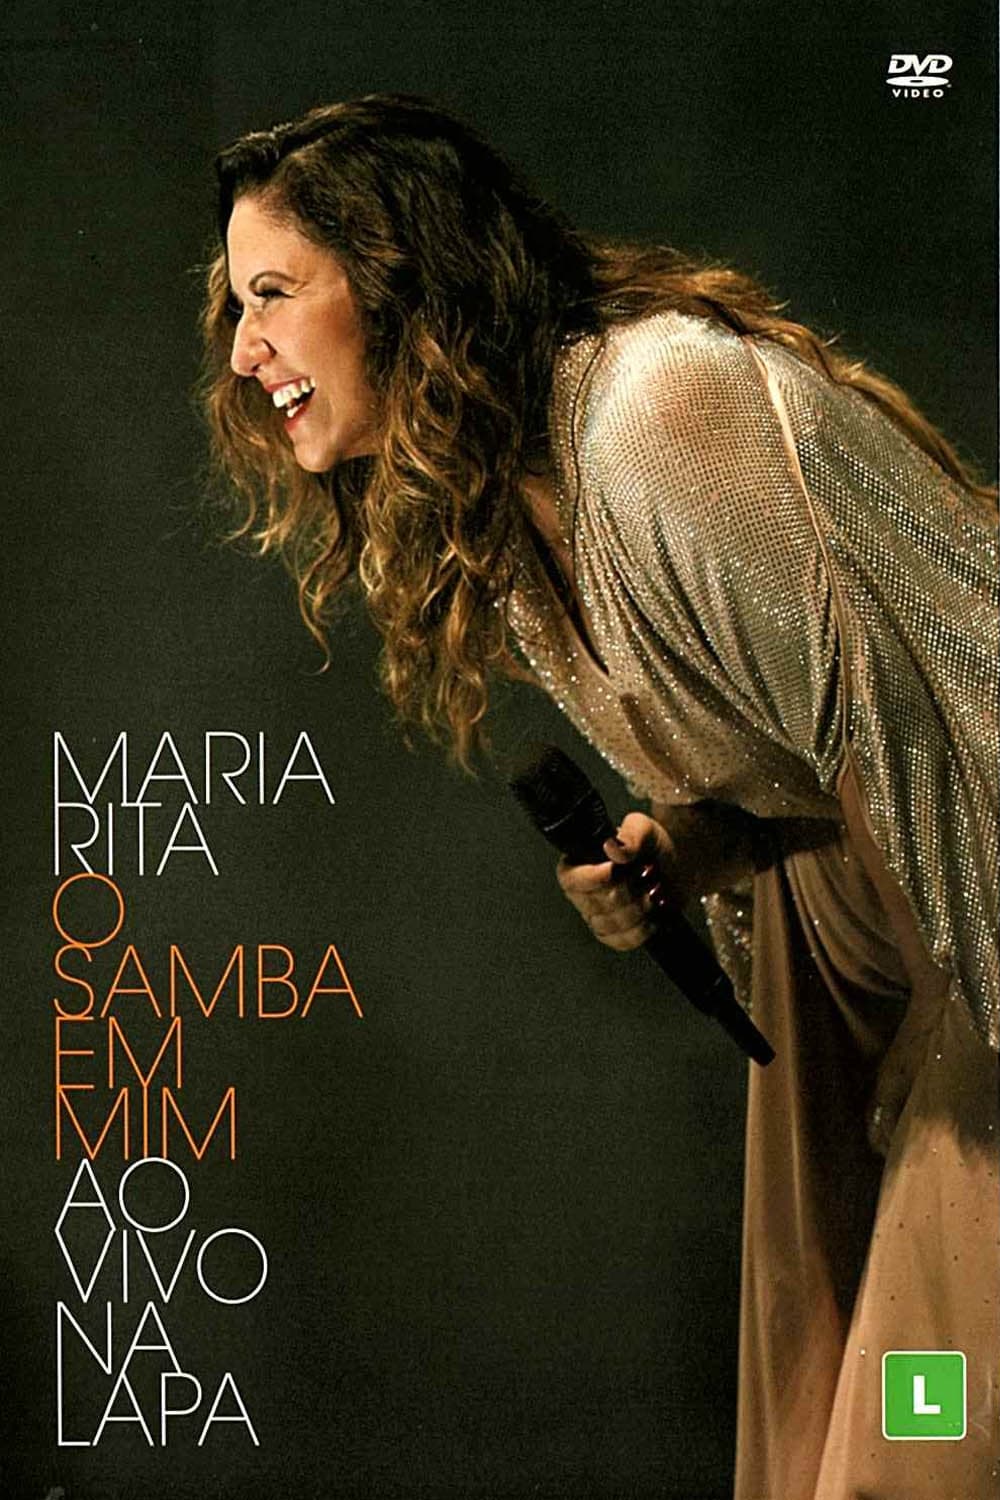 Maria Rita: O Samba Em Mim - Ao Vivo Na Lapa